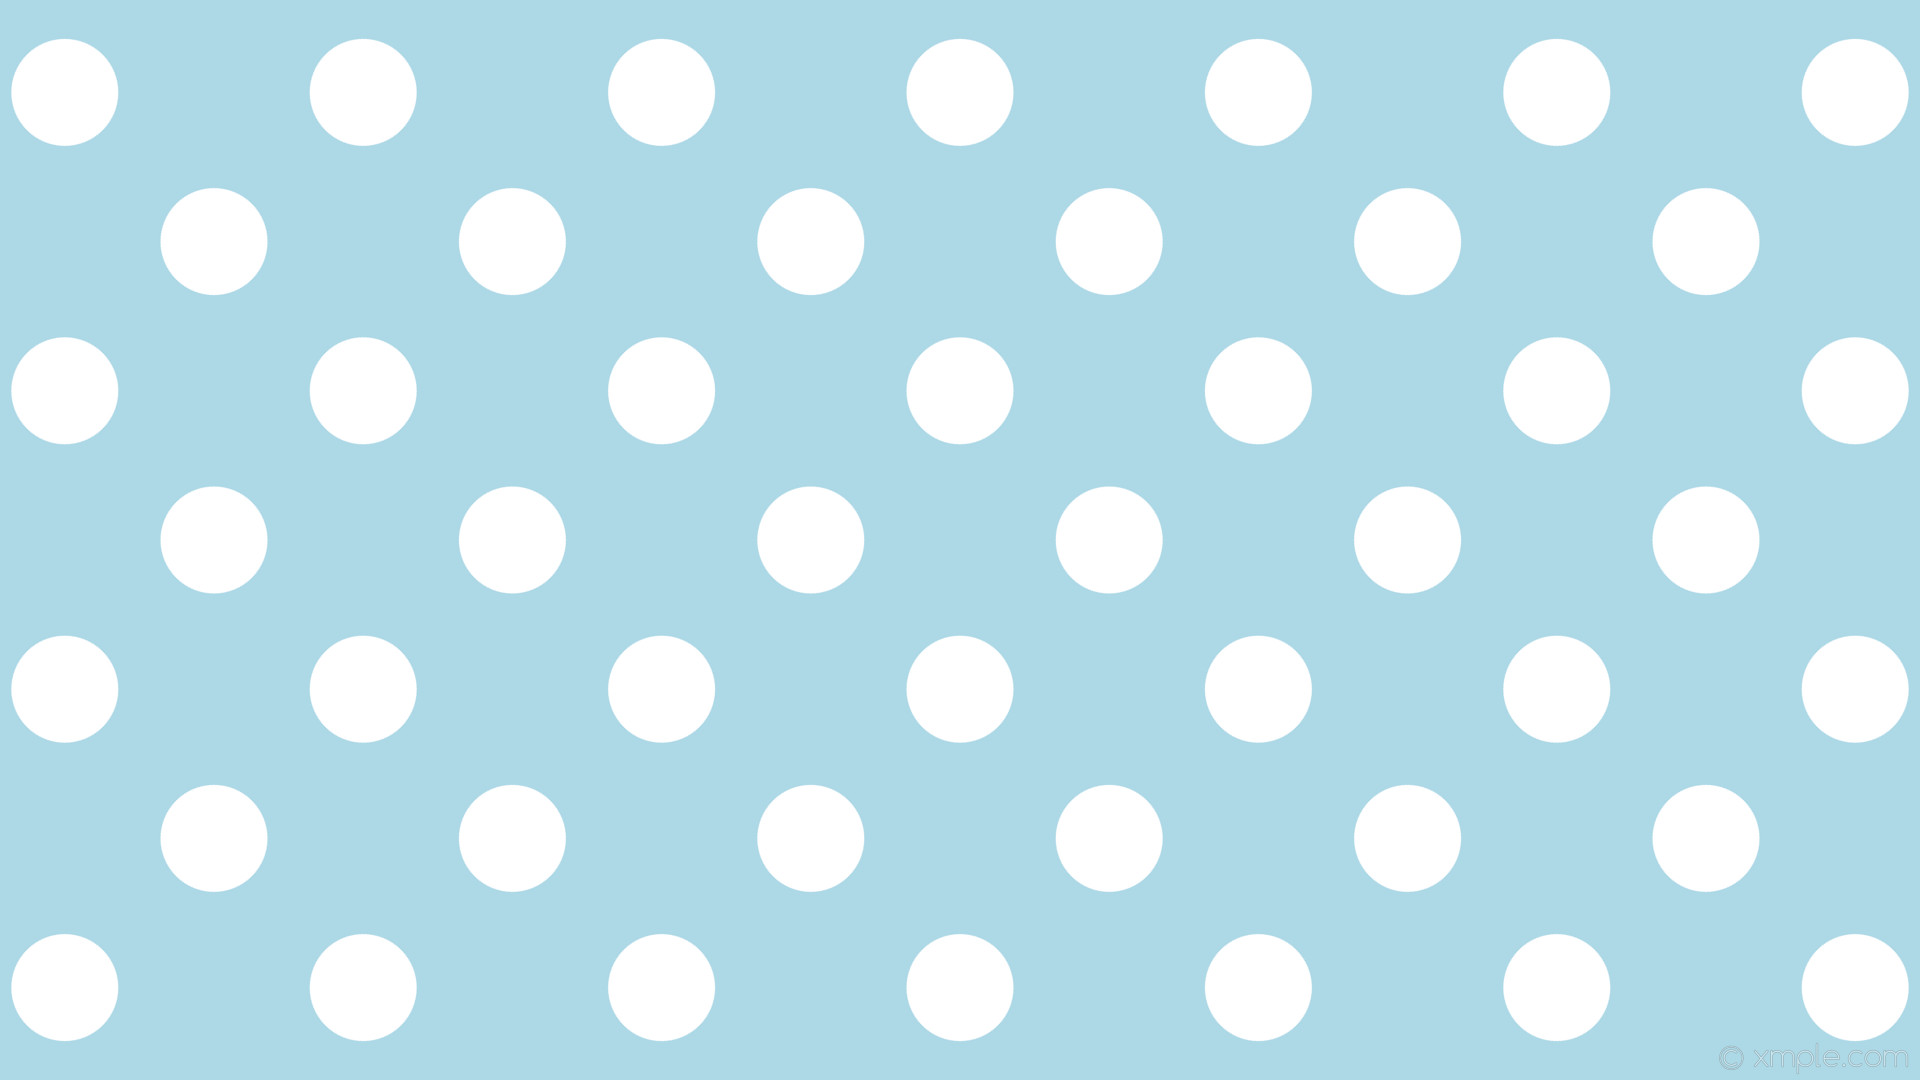 Wallpaper white spots blue polka dots light blue #add8e6 #ffffff 45 107px 211px